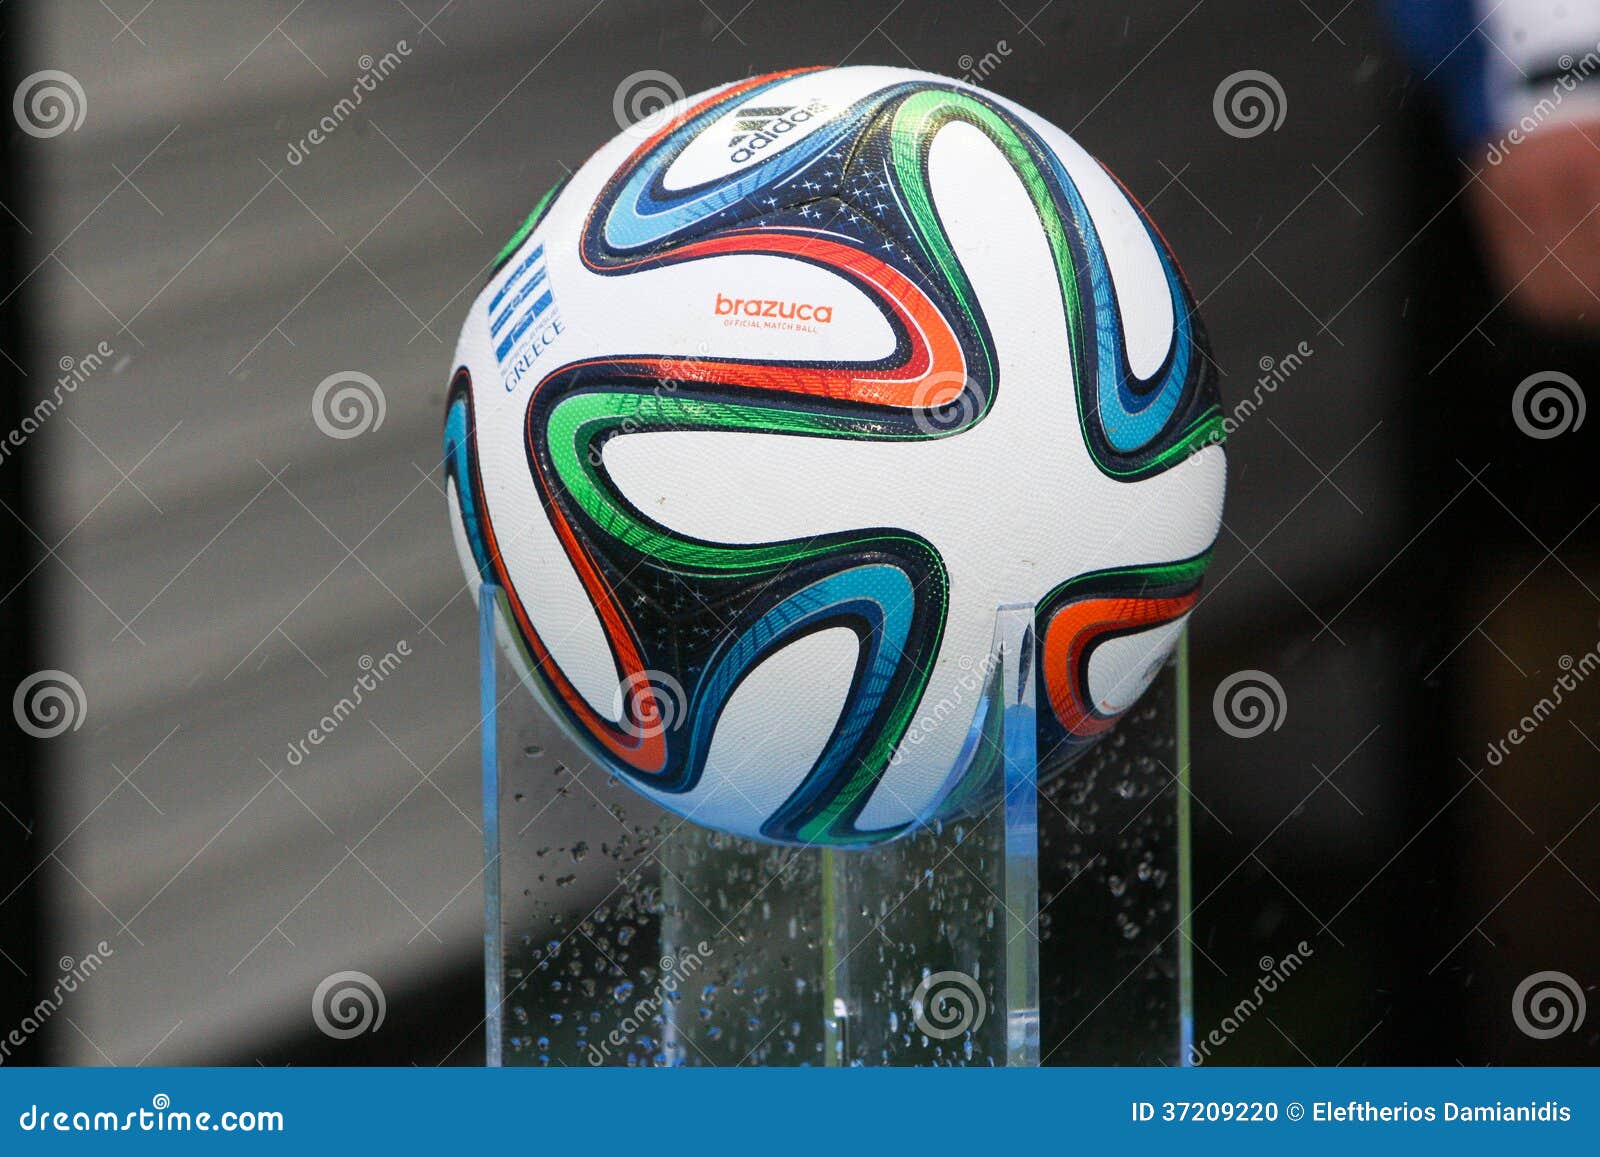 Mundial Brazuca Ball Football ADIDAS Editorial Image - Image of play,  soccer: 37209220